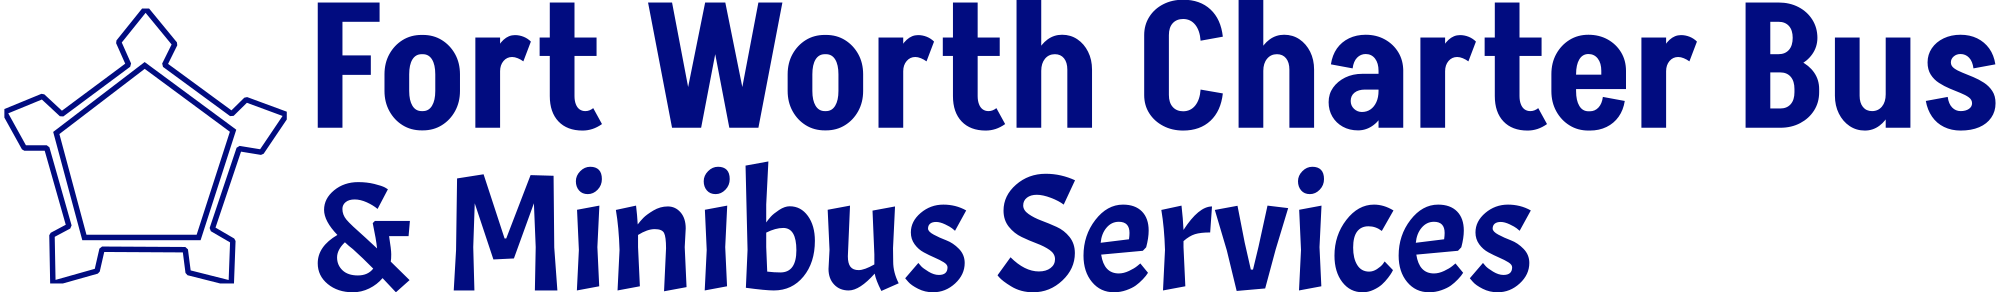 Charter Bus Company Fort Worth logo